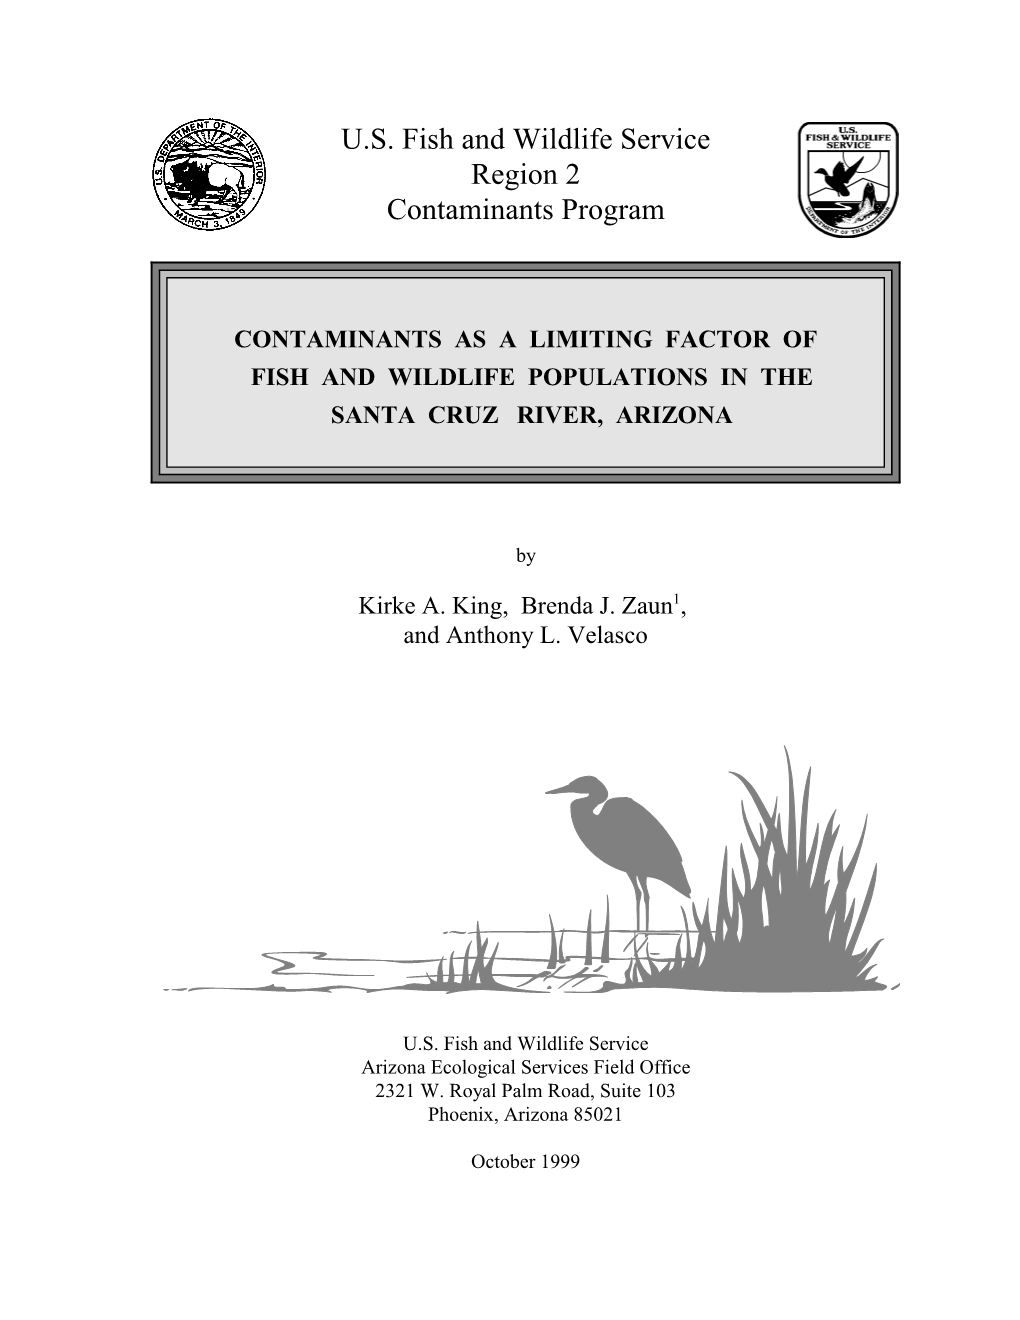 U.S. Fish and Wildlife Service Region 2 Contaminants Program